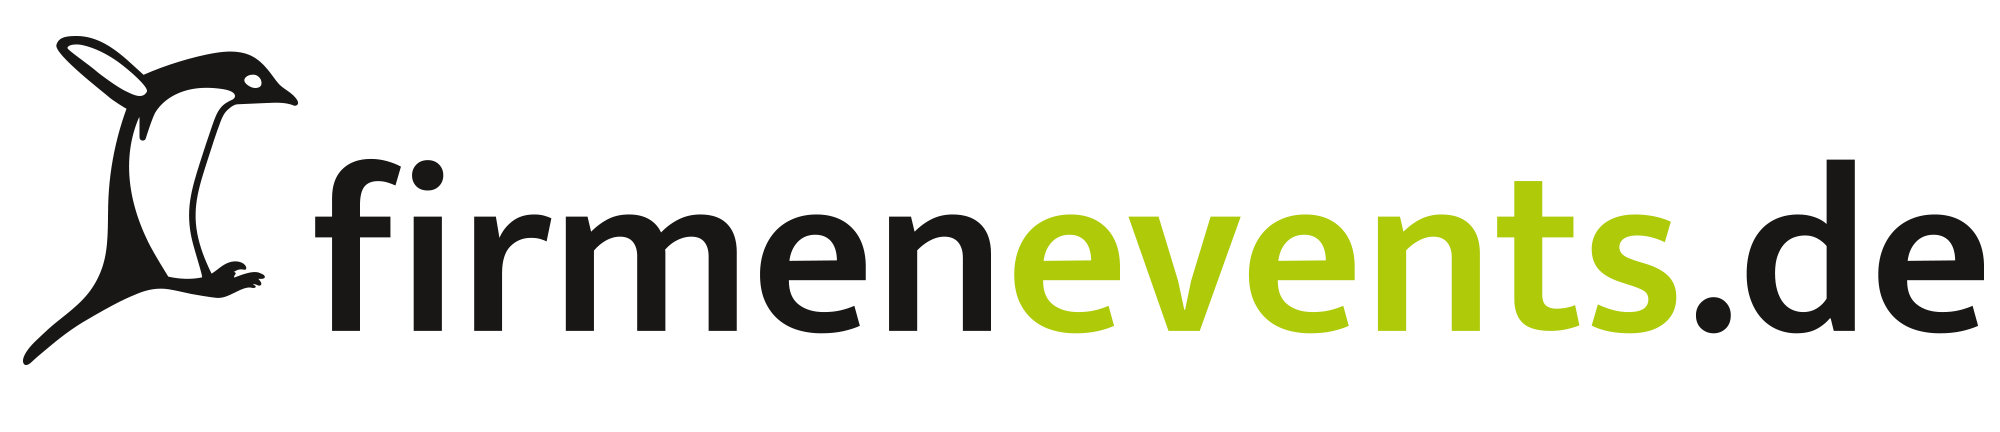 firmenevents-logo (1)